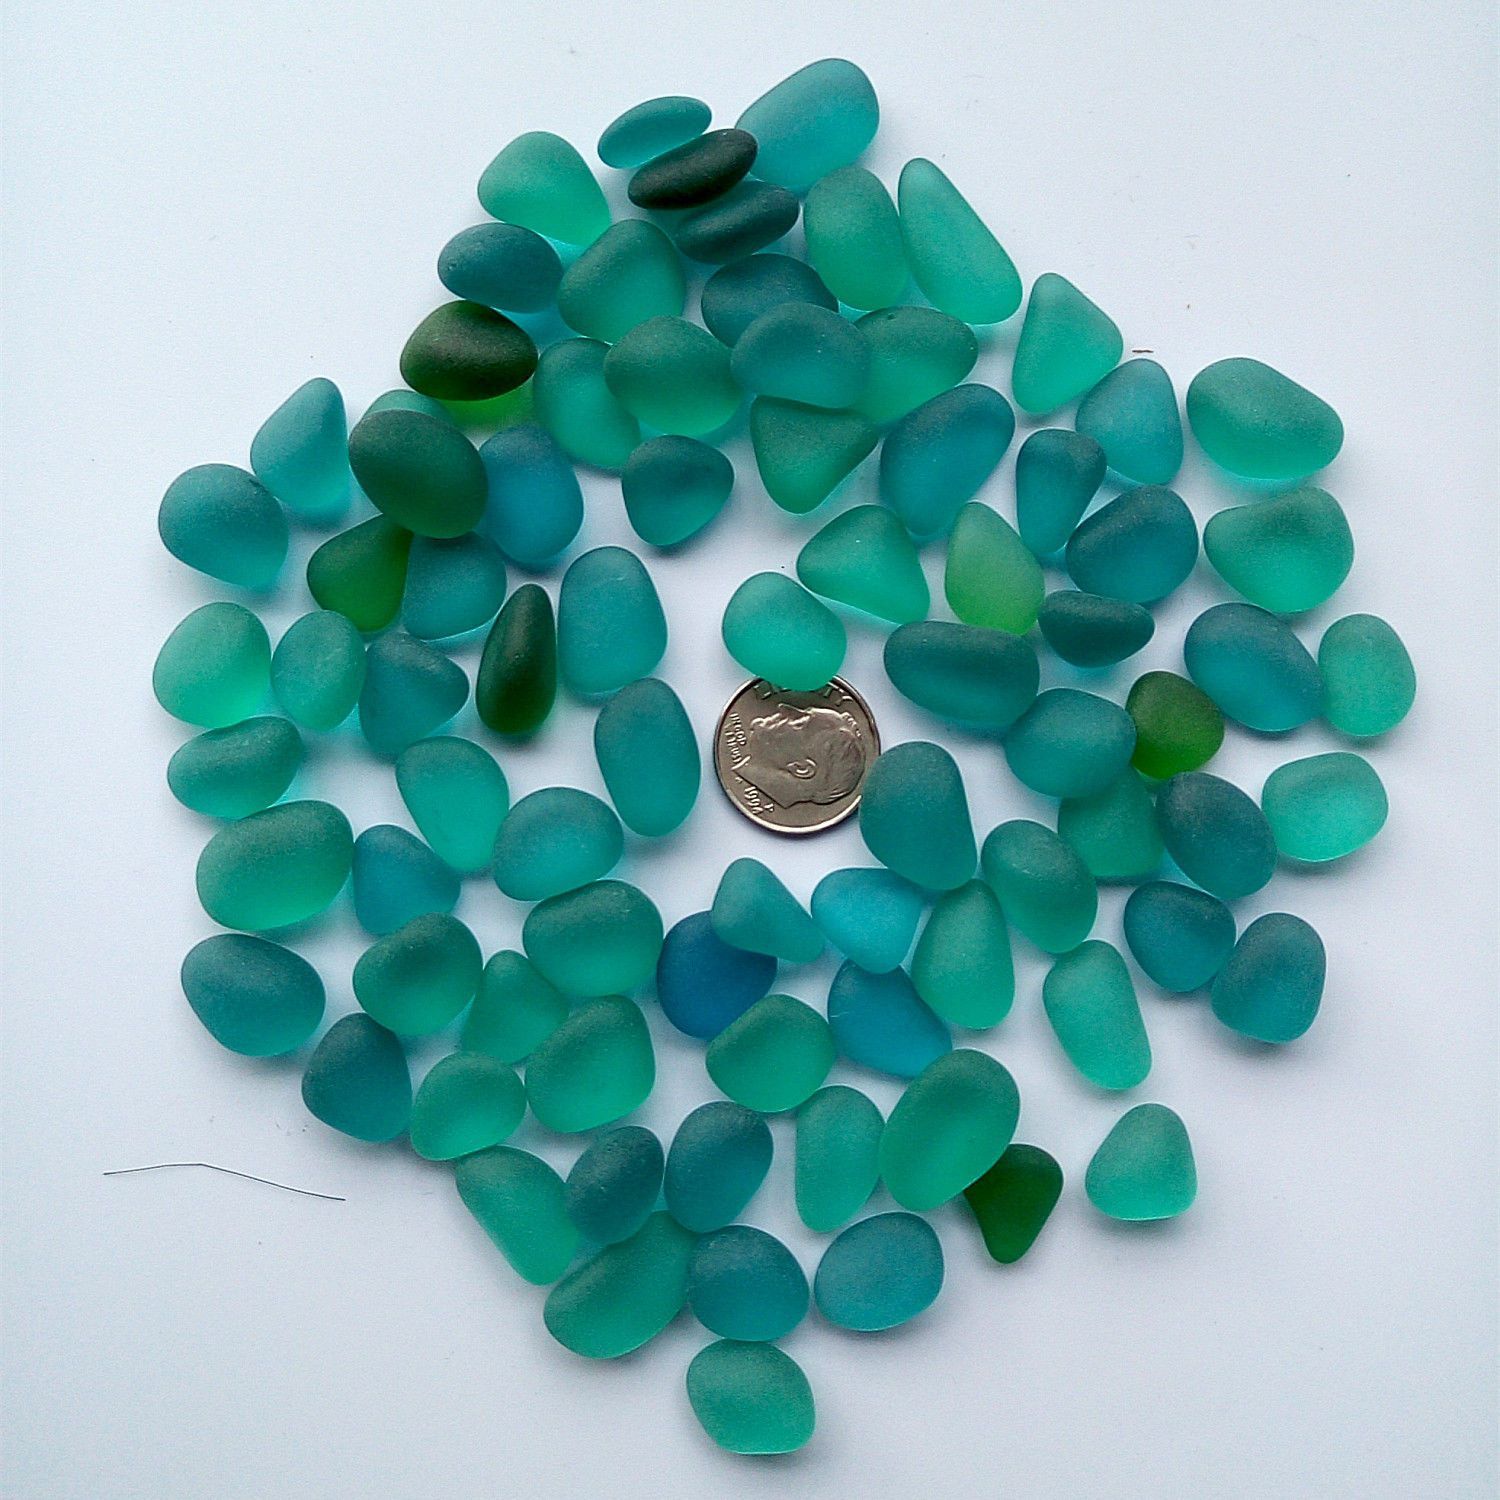 20Pcs-Sea-Beach-Glass-Beads-Jewelry-Vase-Aquarium-Fish-Tank-Decorations-12-18mm-1279319